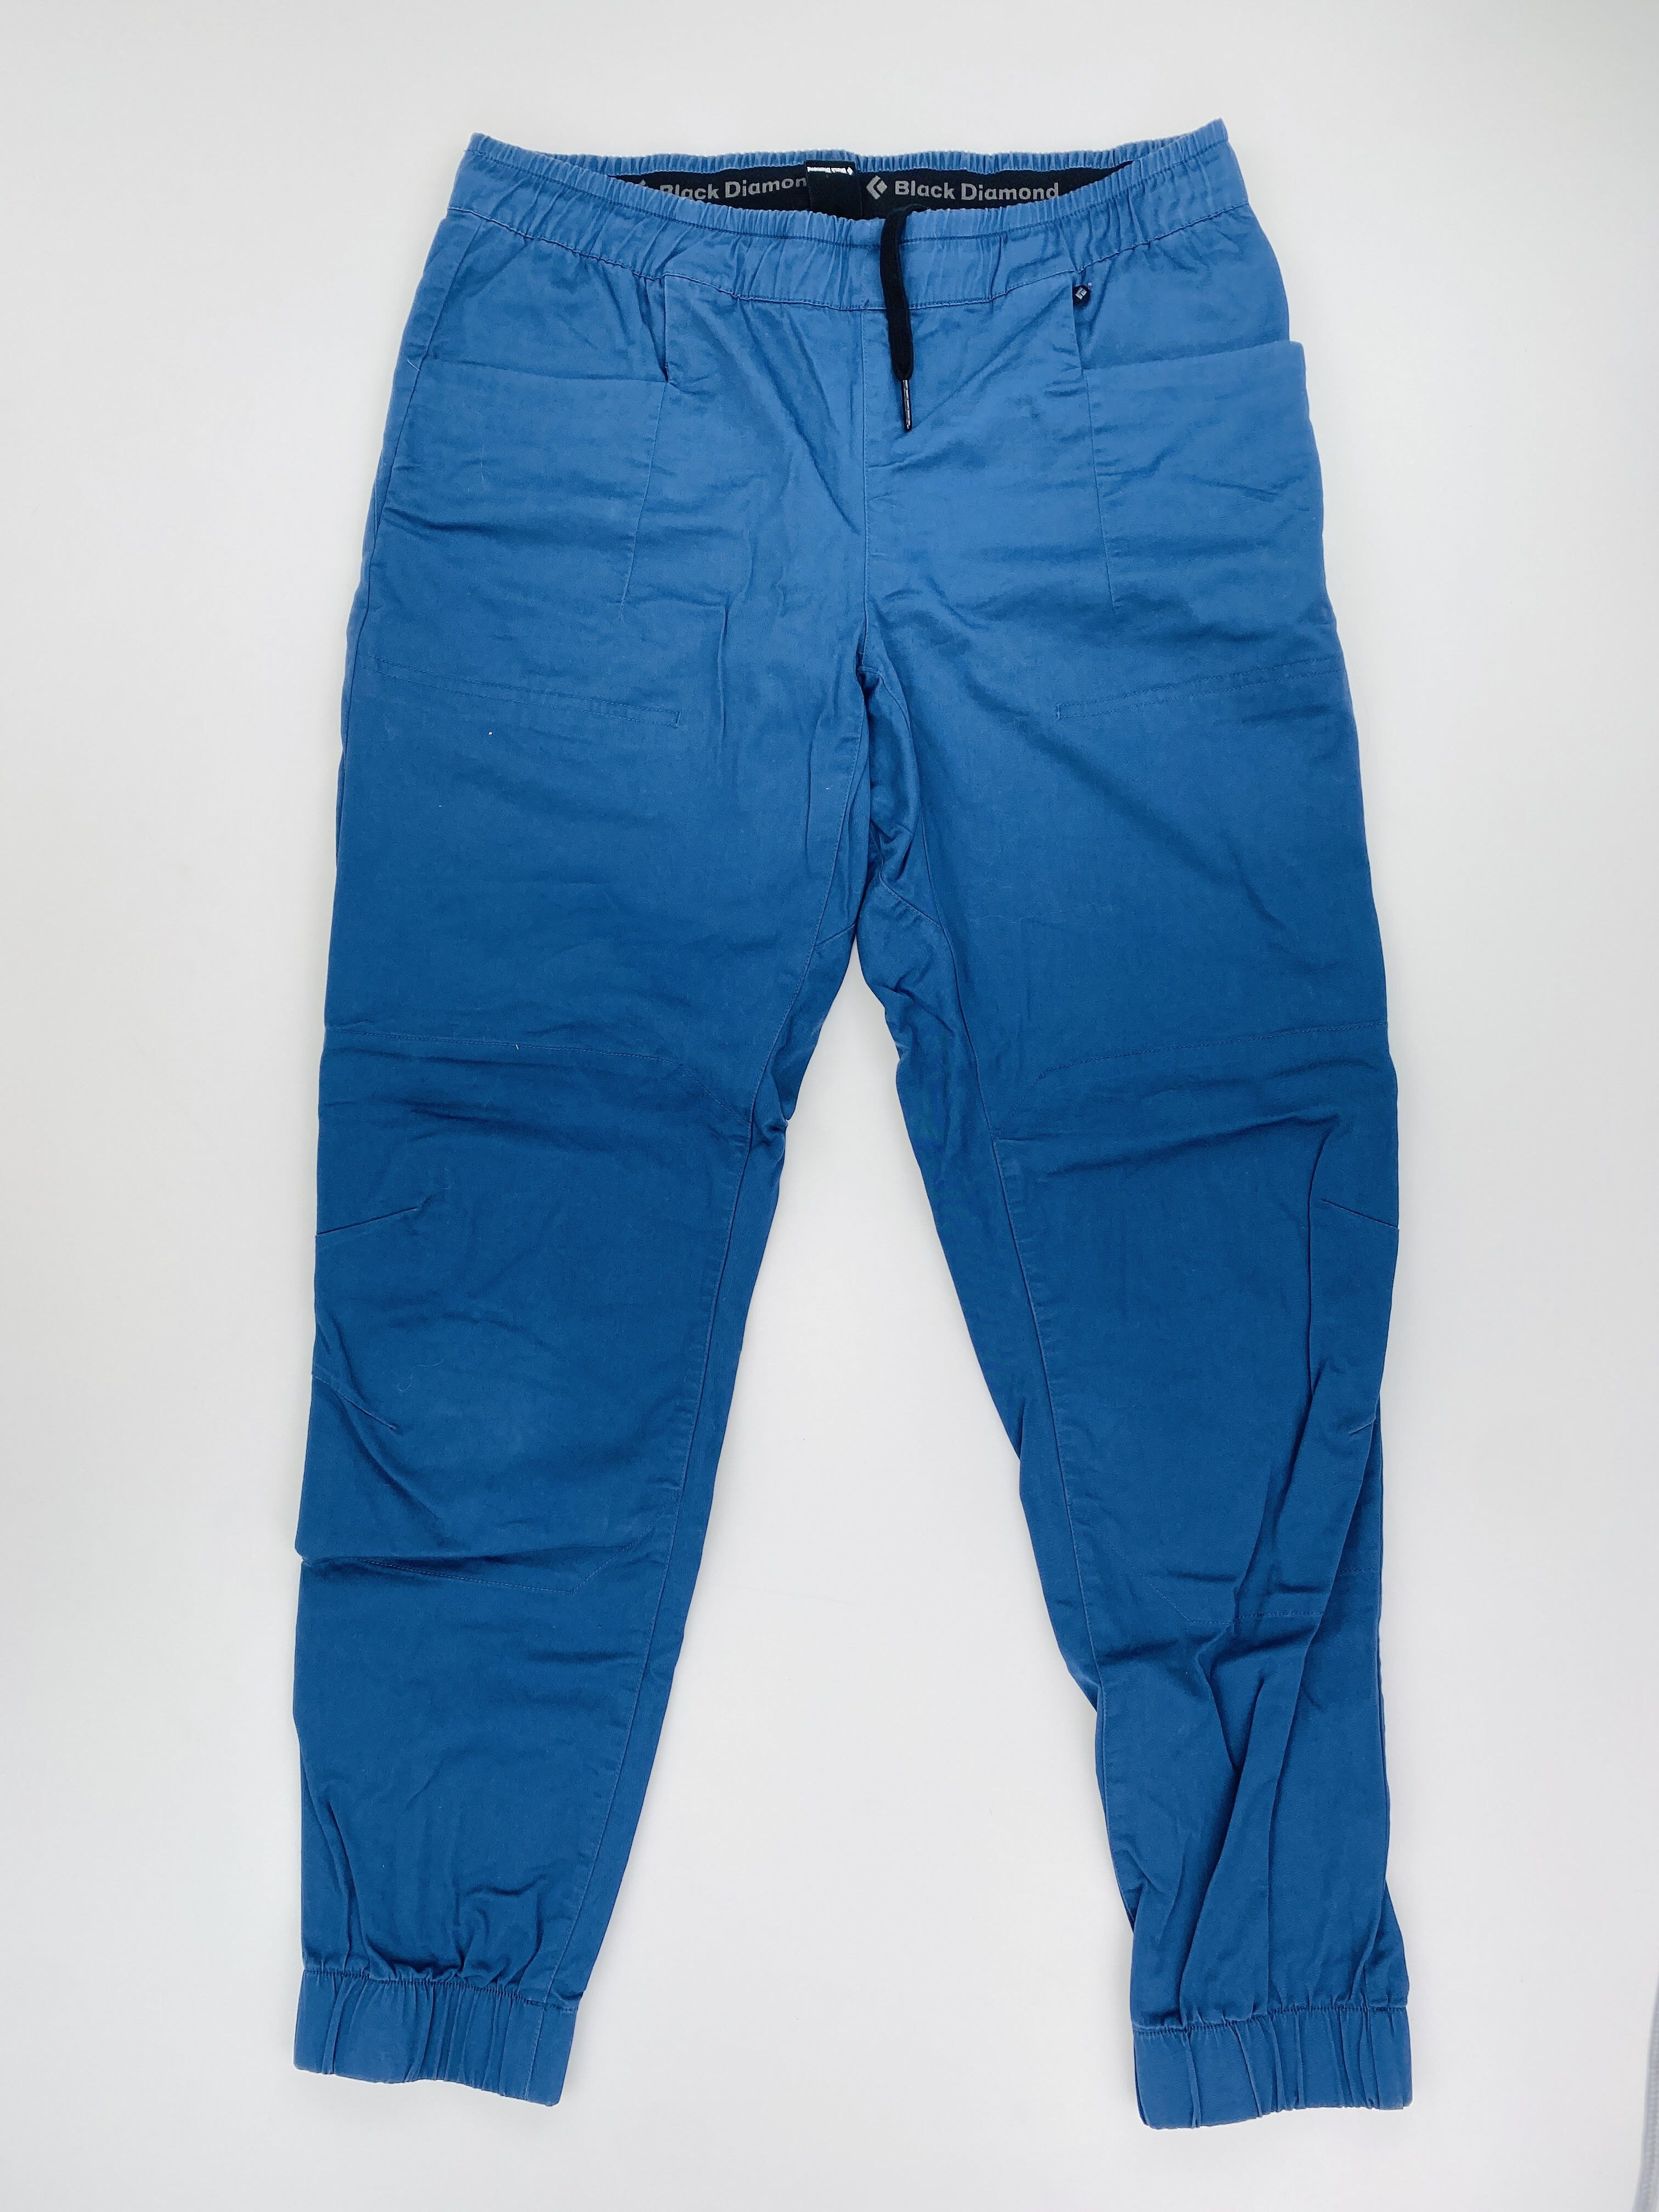 Black Diamond Notion Sp Pant - Seconde main Pantalon randonnée femme - Bleu - L | Hardloop